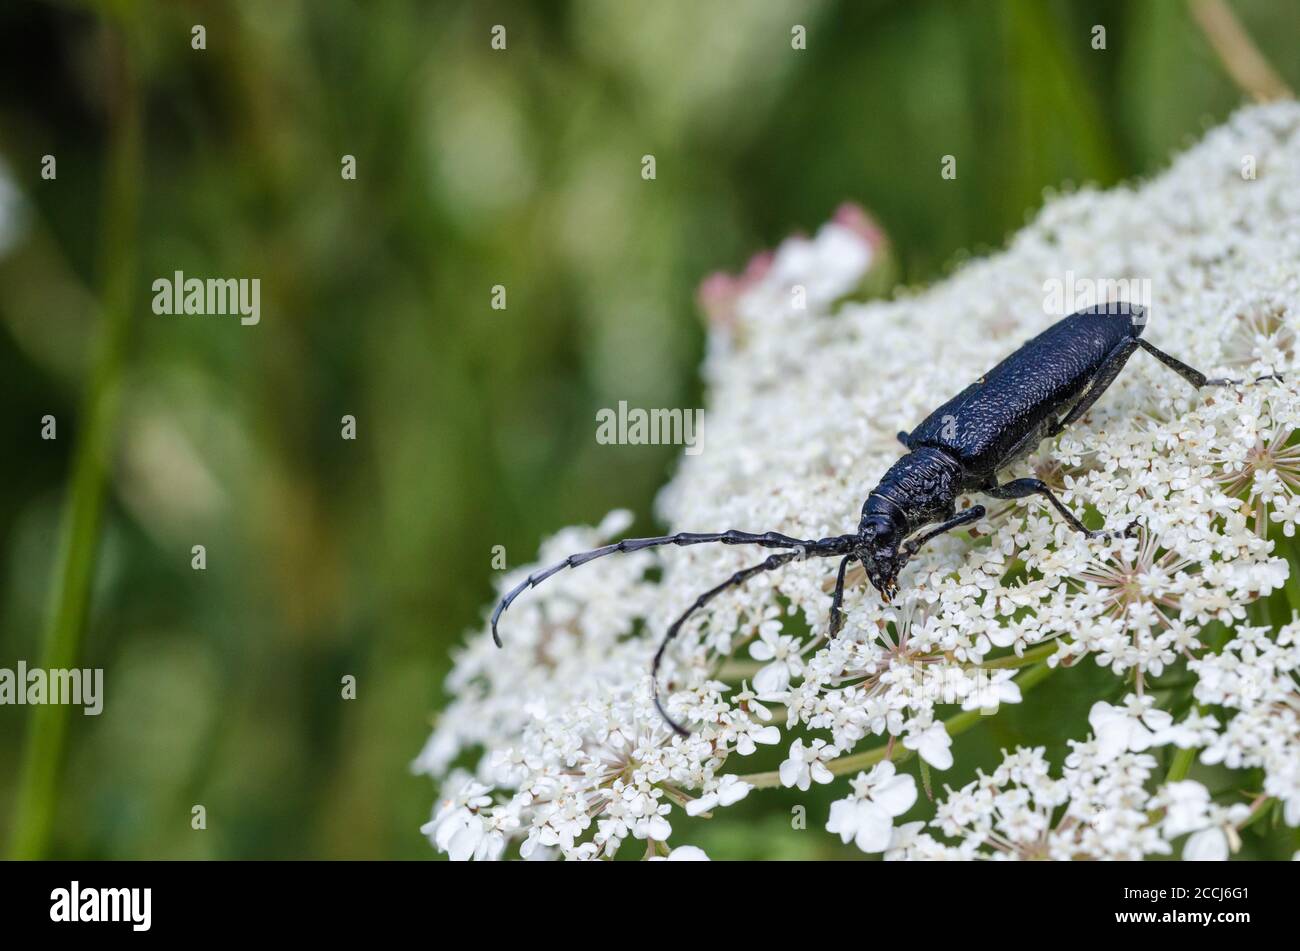 Black longhorn beetle, Capricorn Beetle, close up on a wild carrot flower Stock Photo